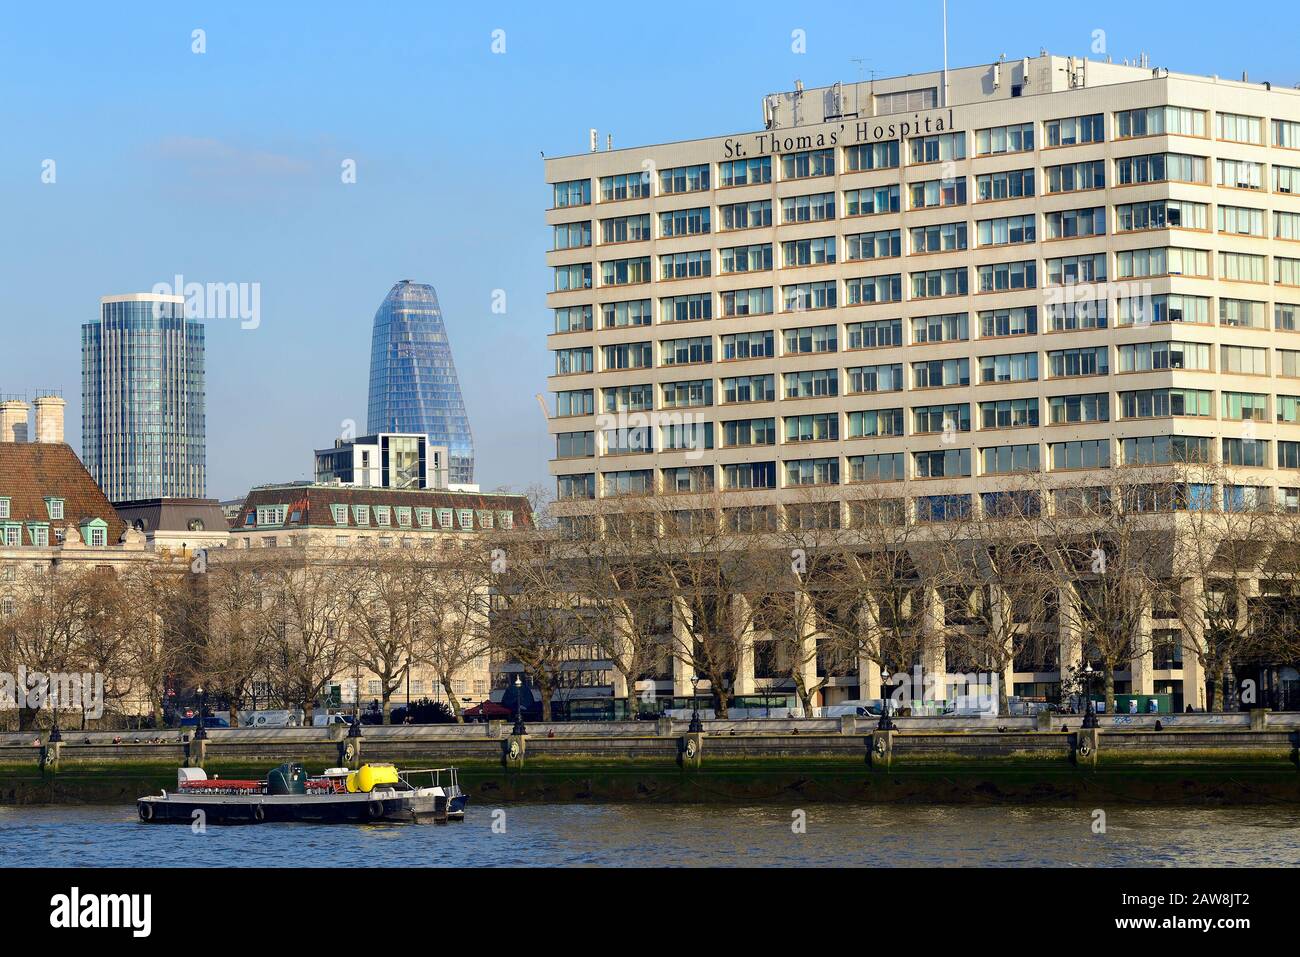 London, England, UK. St Thomas' Hospital seen from Parliament Stock Photo